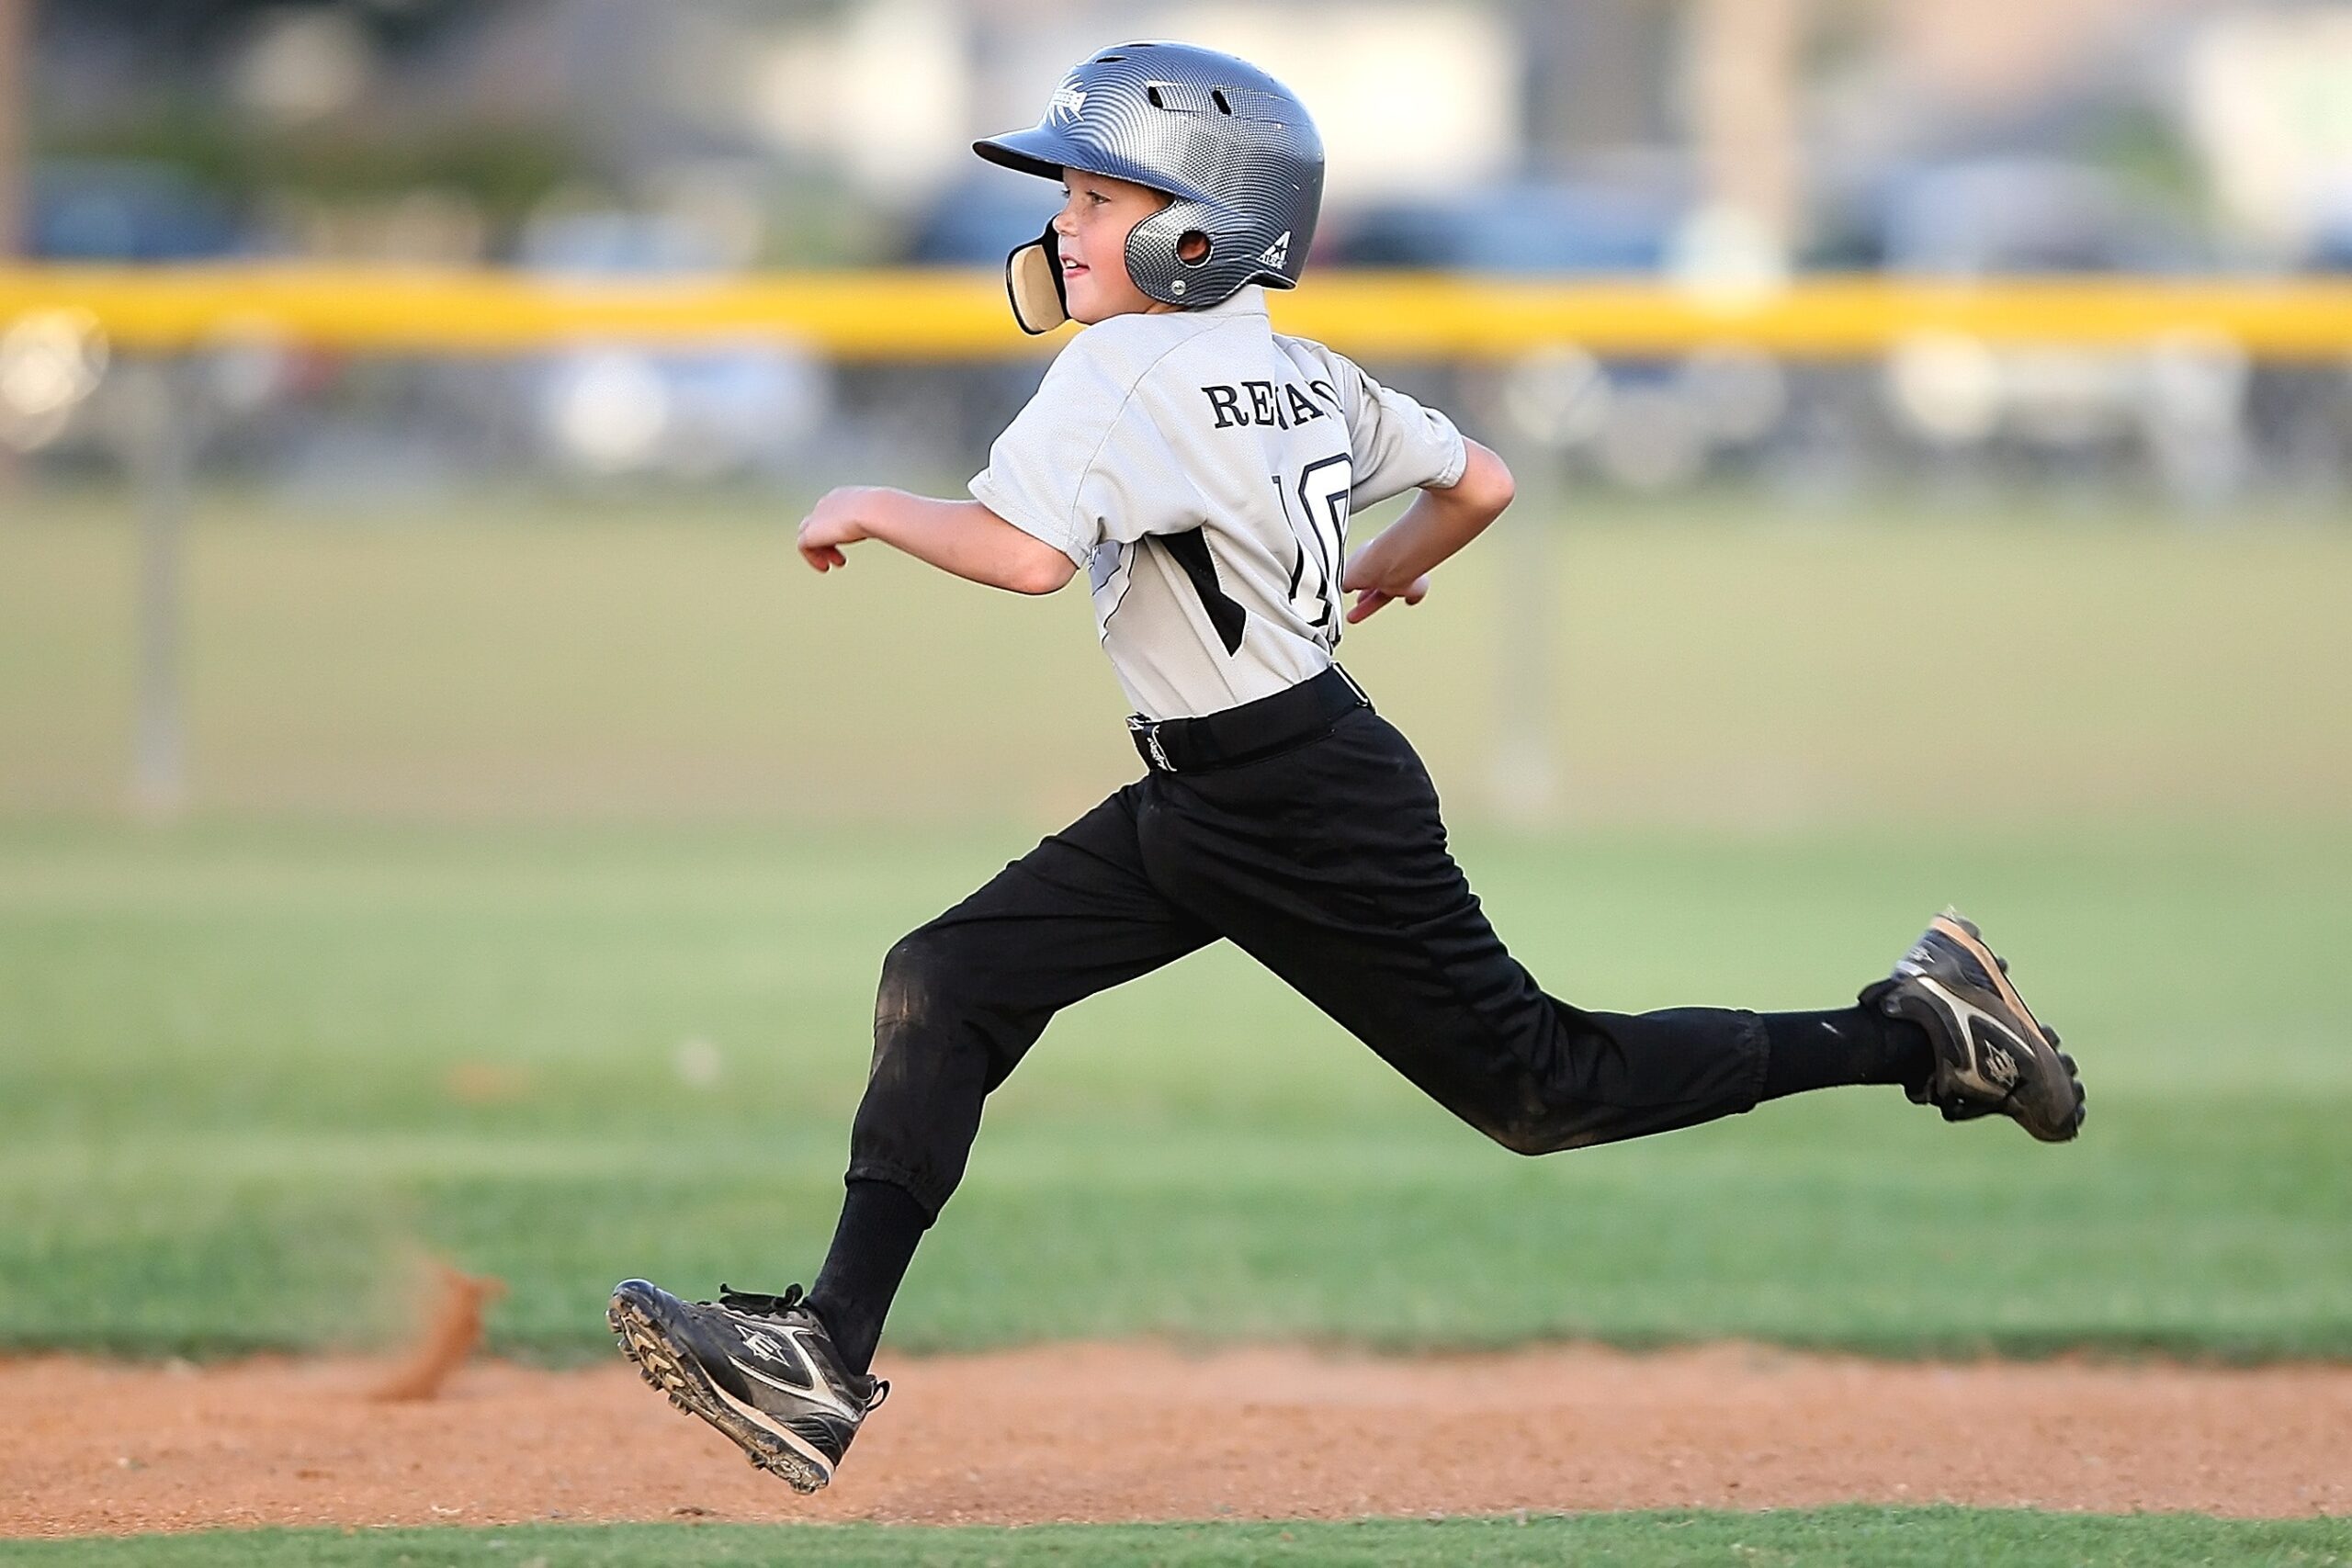 baseball-player-in-gray-and-black-uniform-running